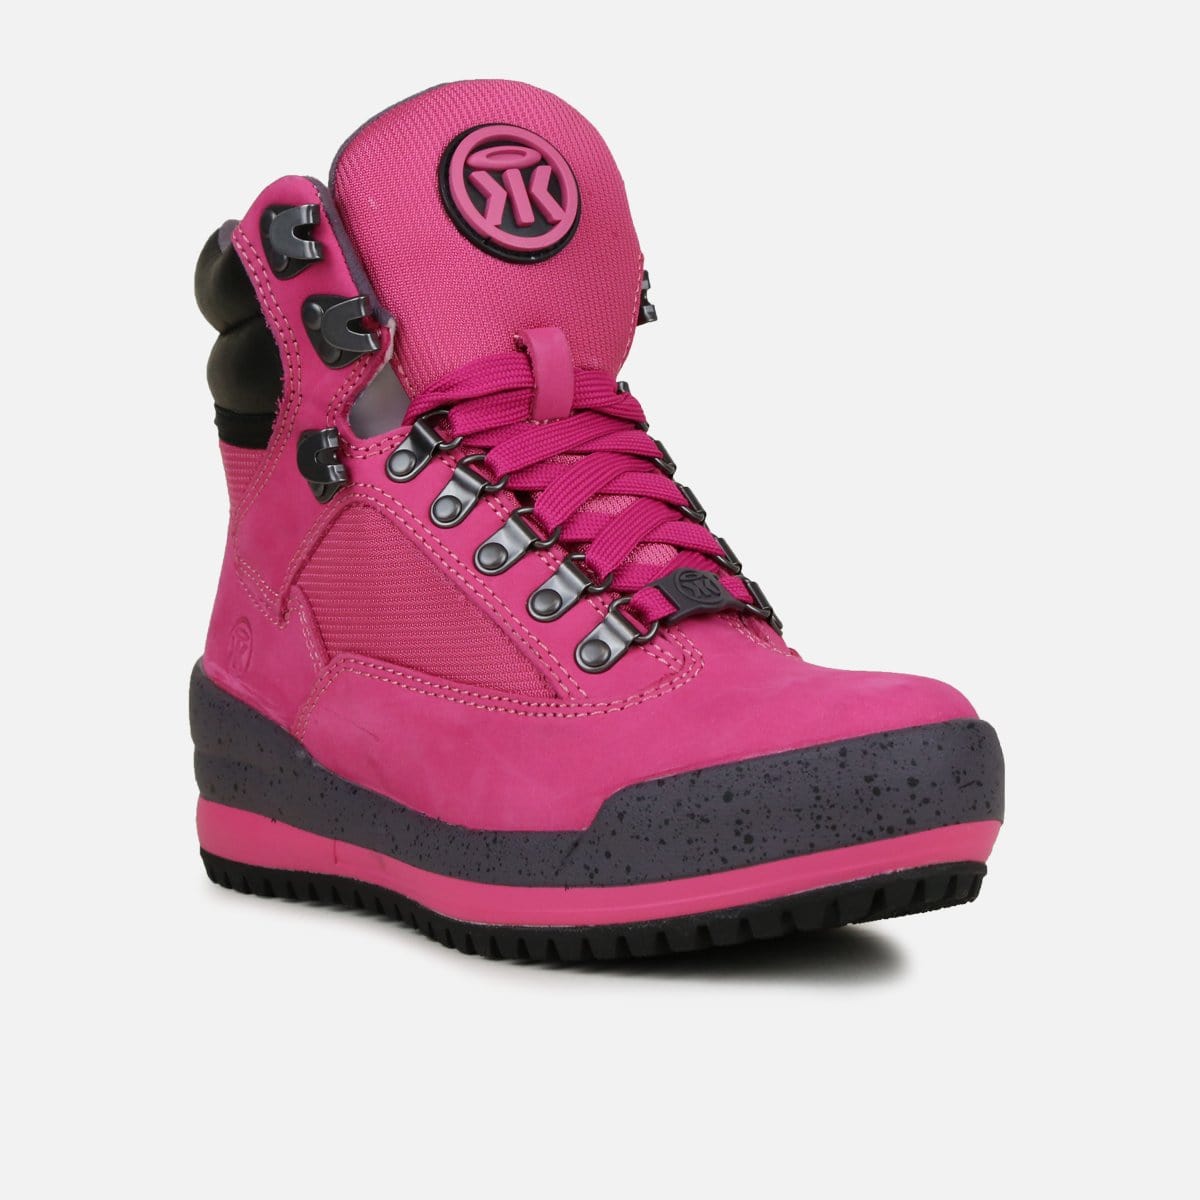 Summiko Swagg Grade-School Girls' Boot (Pink/Black)